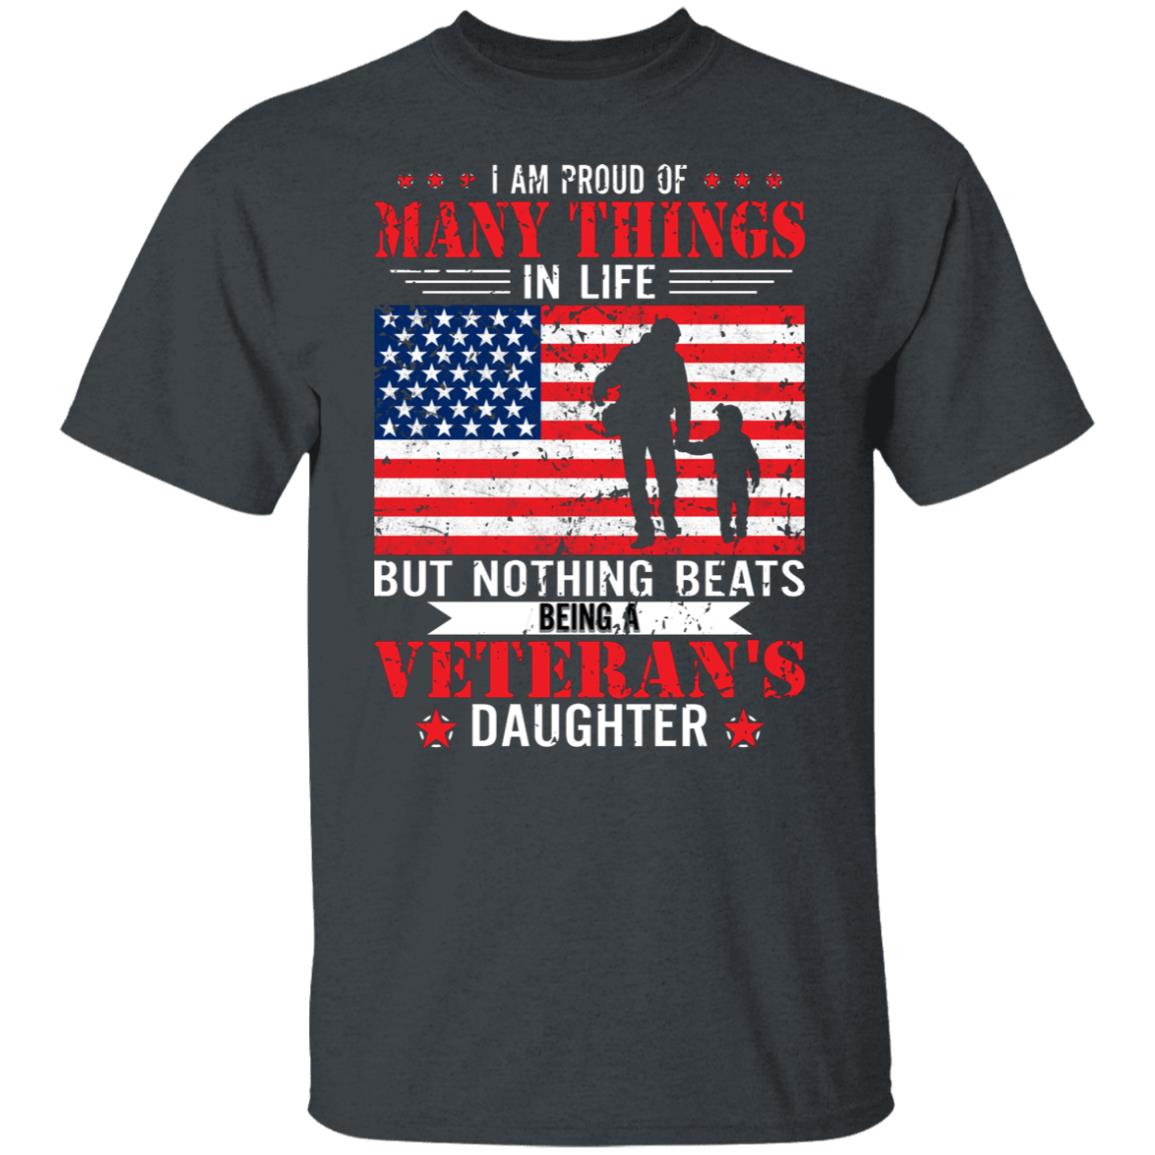 Nothing Beats Being a Veteran's Daughter Veteran's Day Gift Shirt